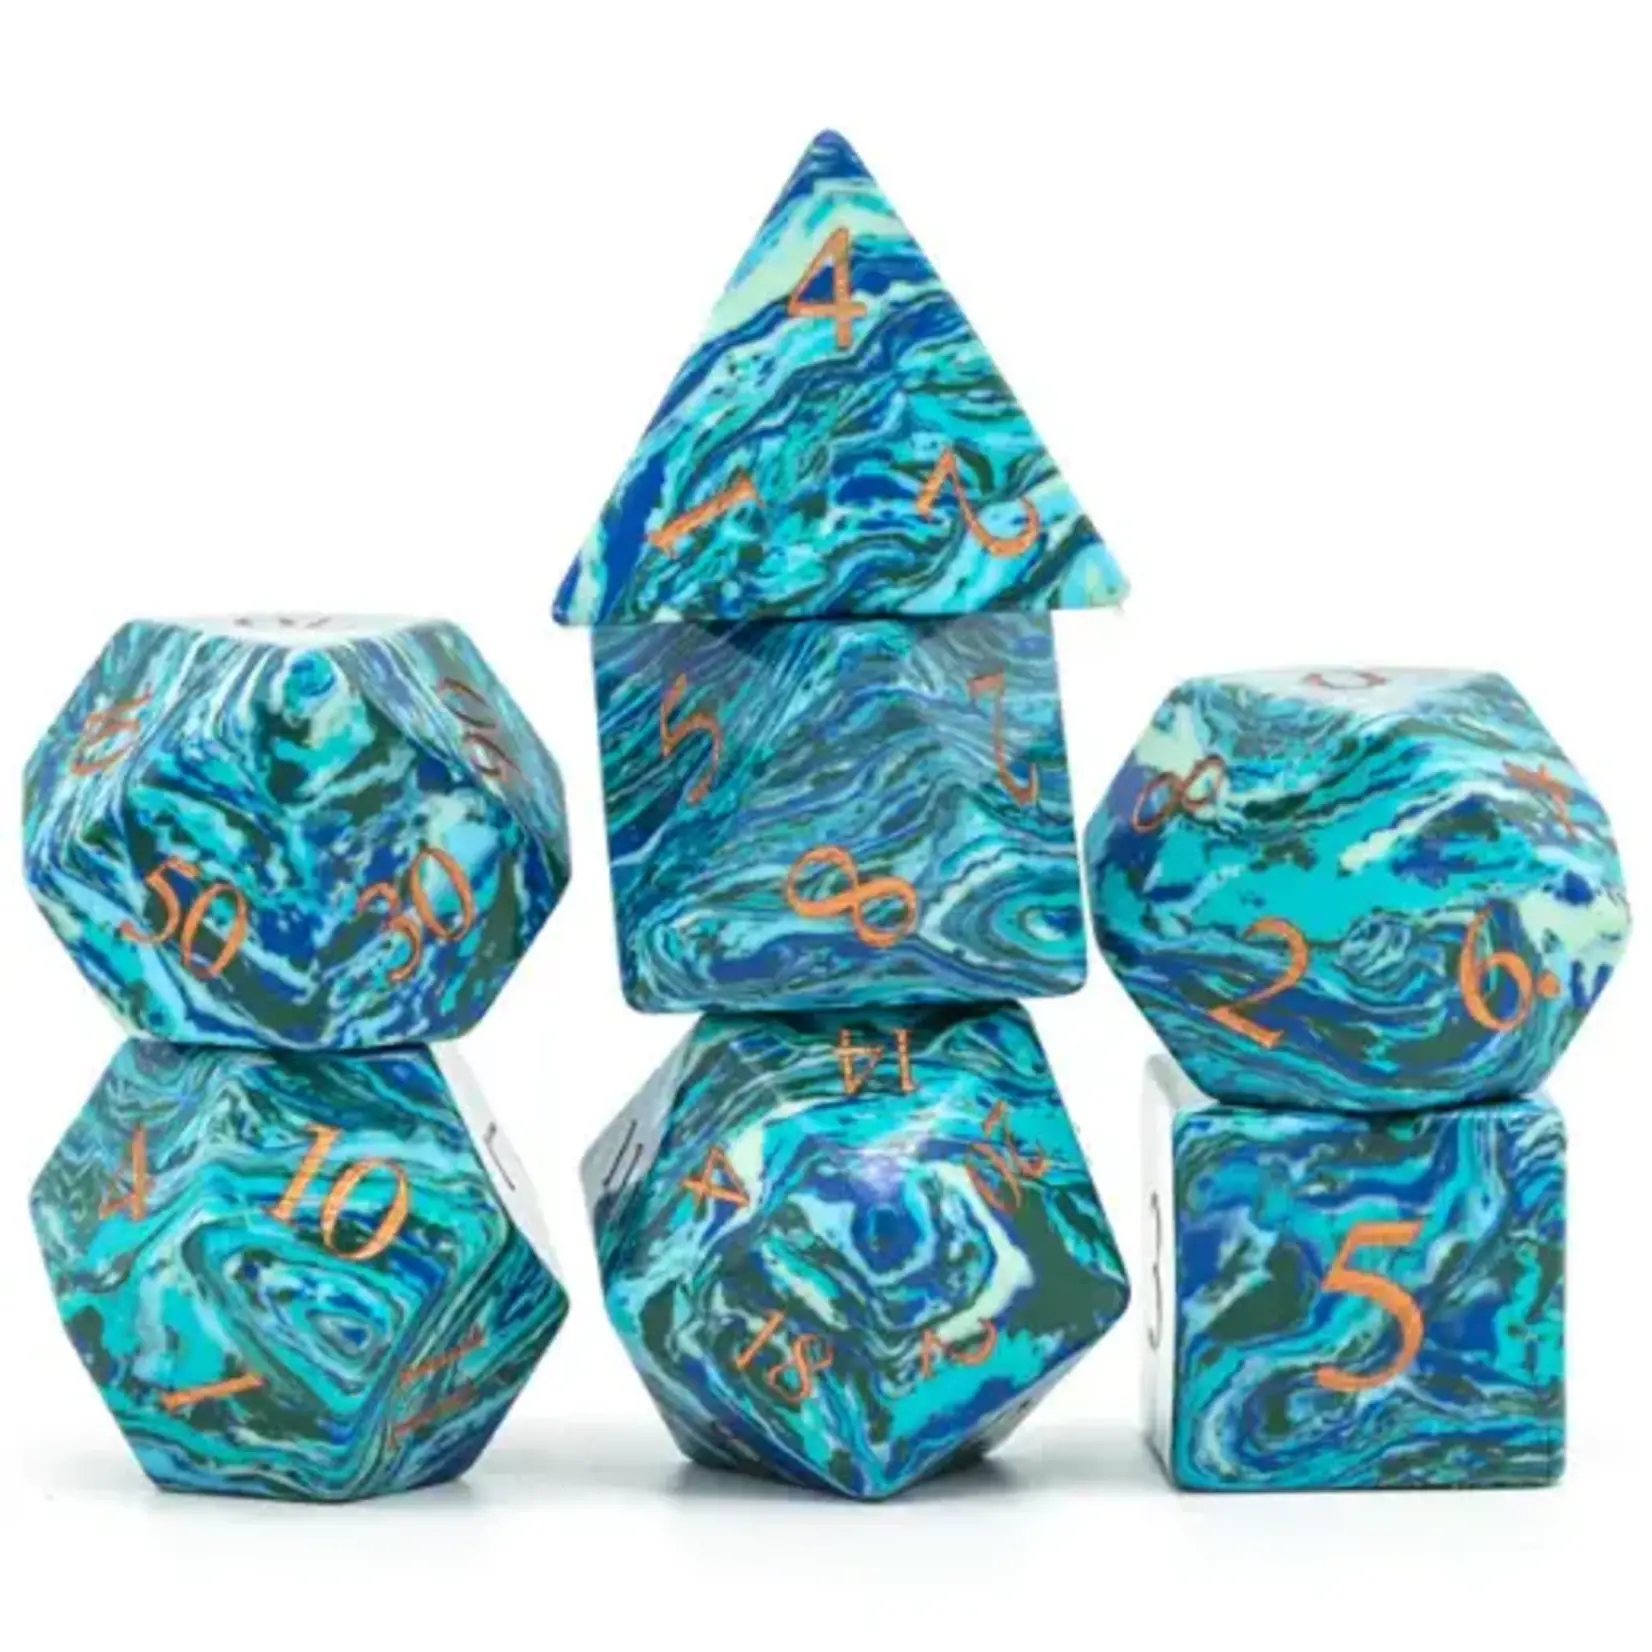 Foam Brain Gemstone Dice Set - Textured Turquoise Shades of Blue - Engraved